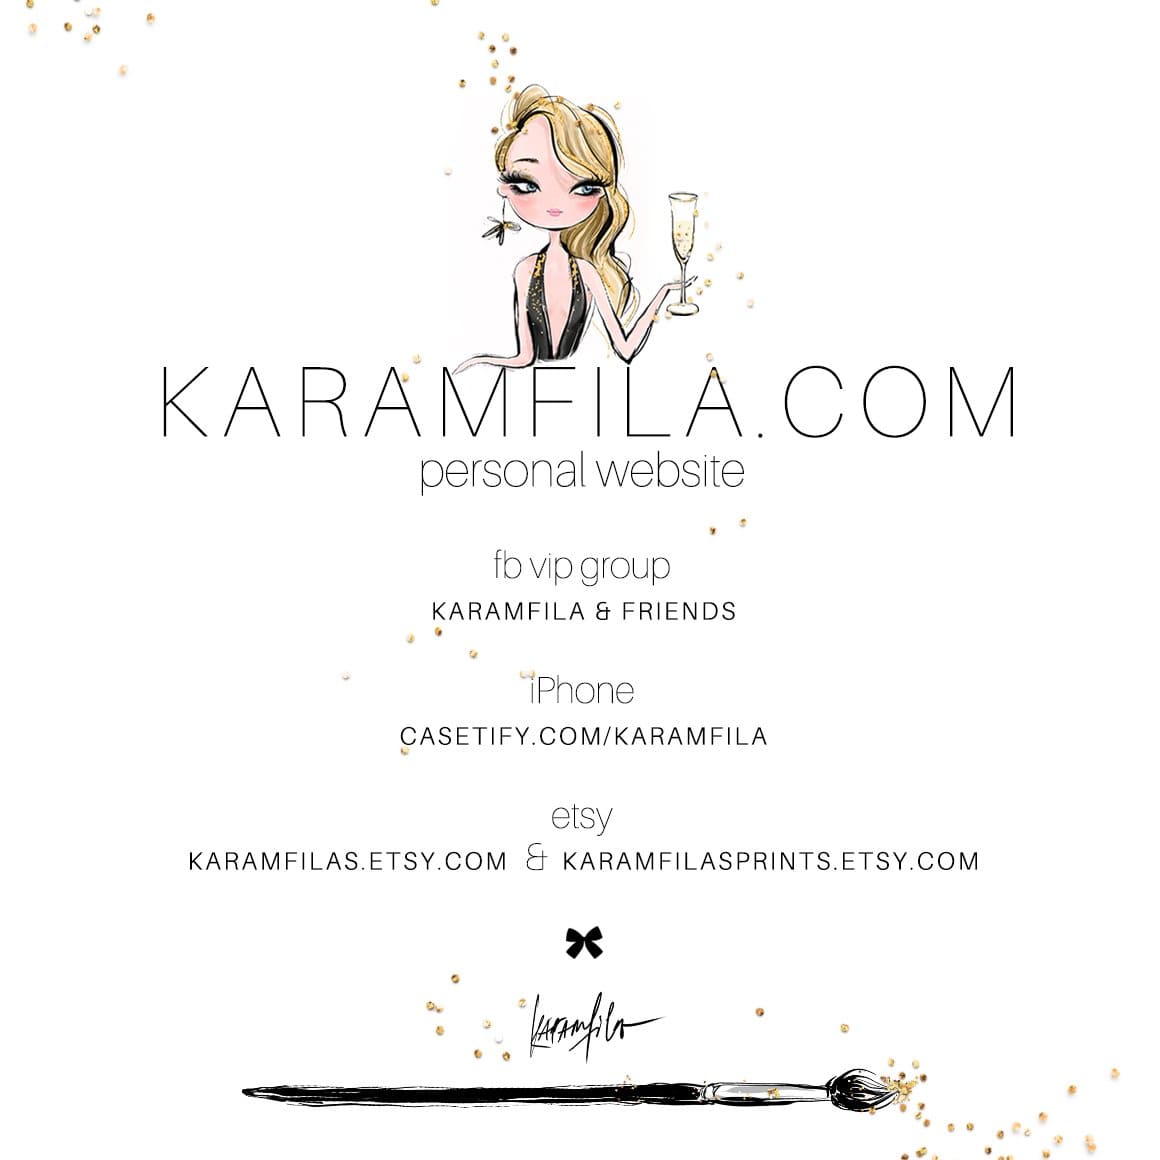 Personal website of Karamfila.